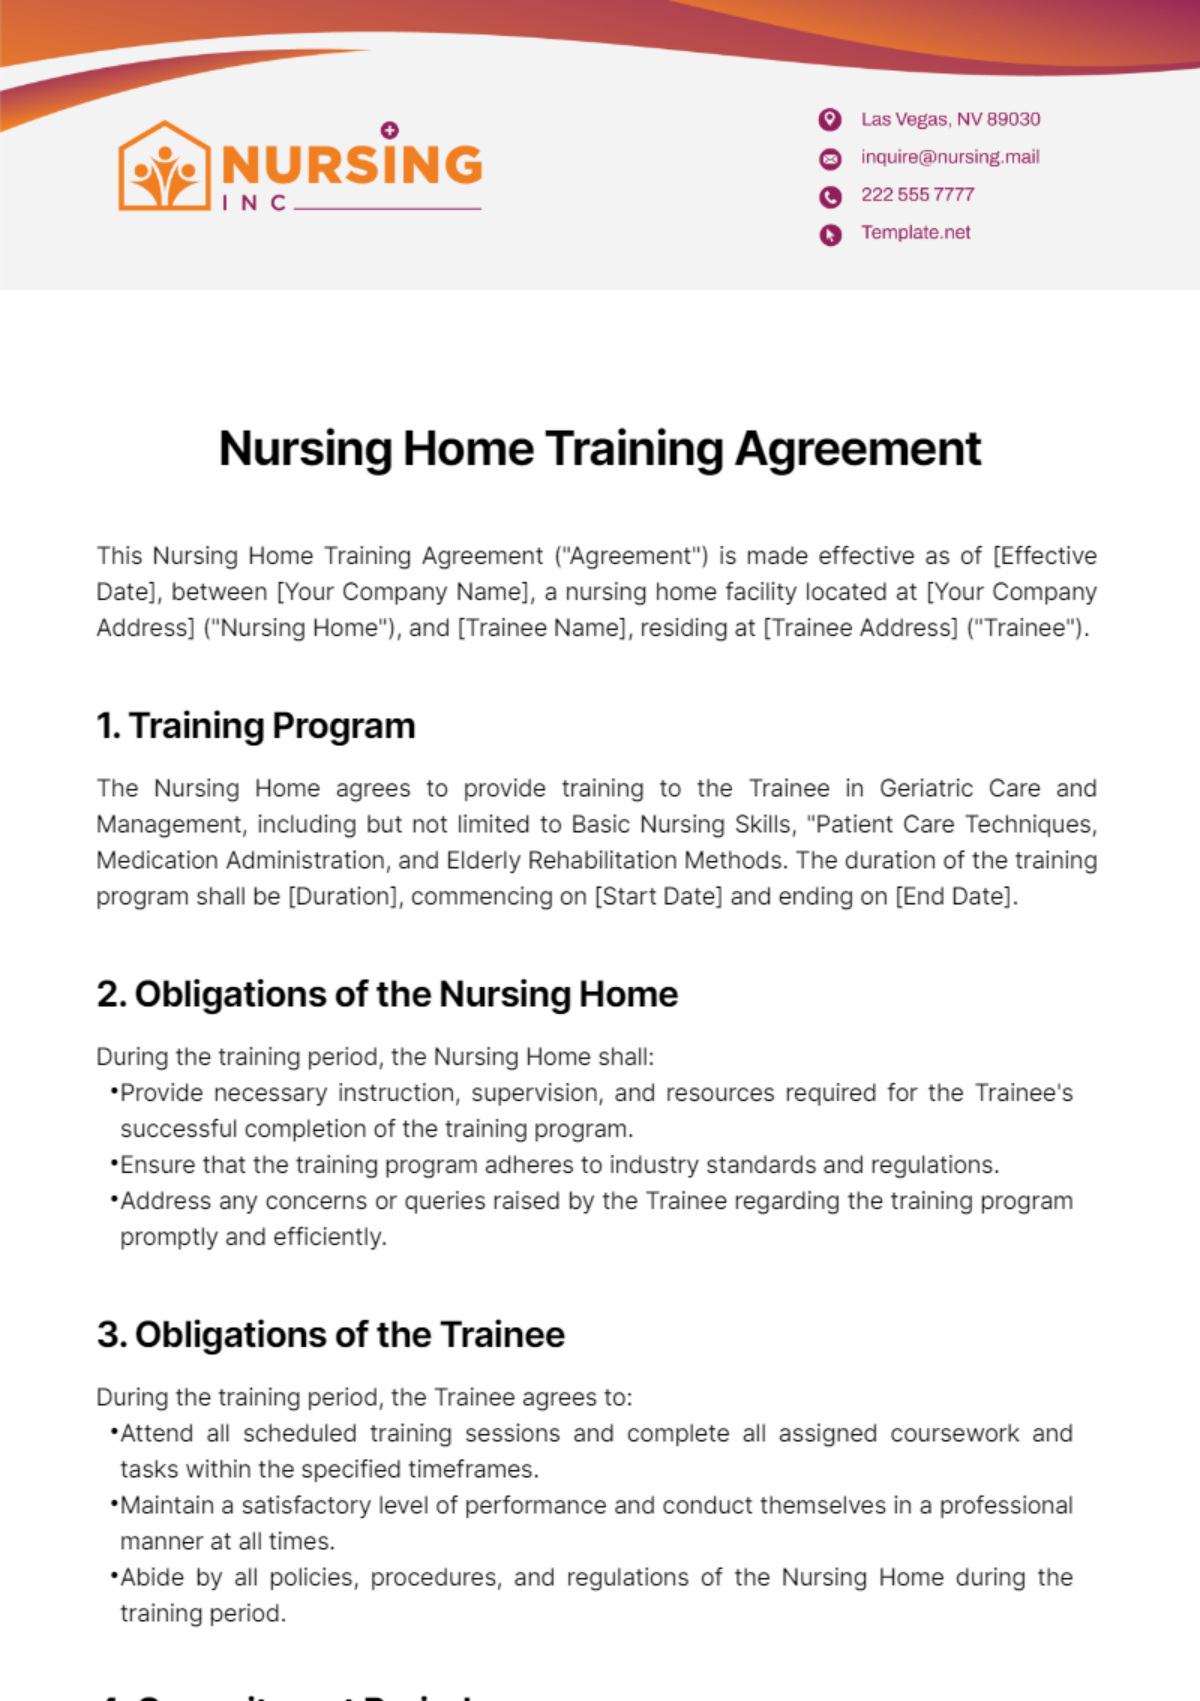 Nursing Home Training Agreement Template